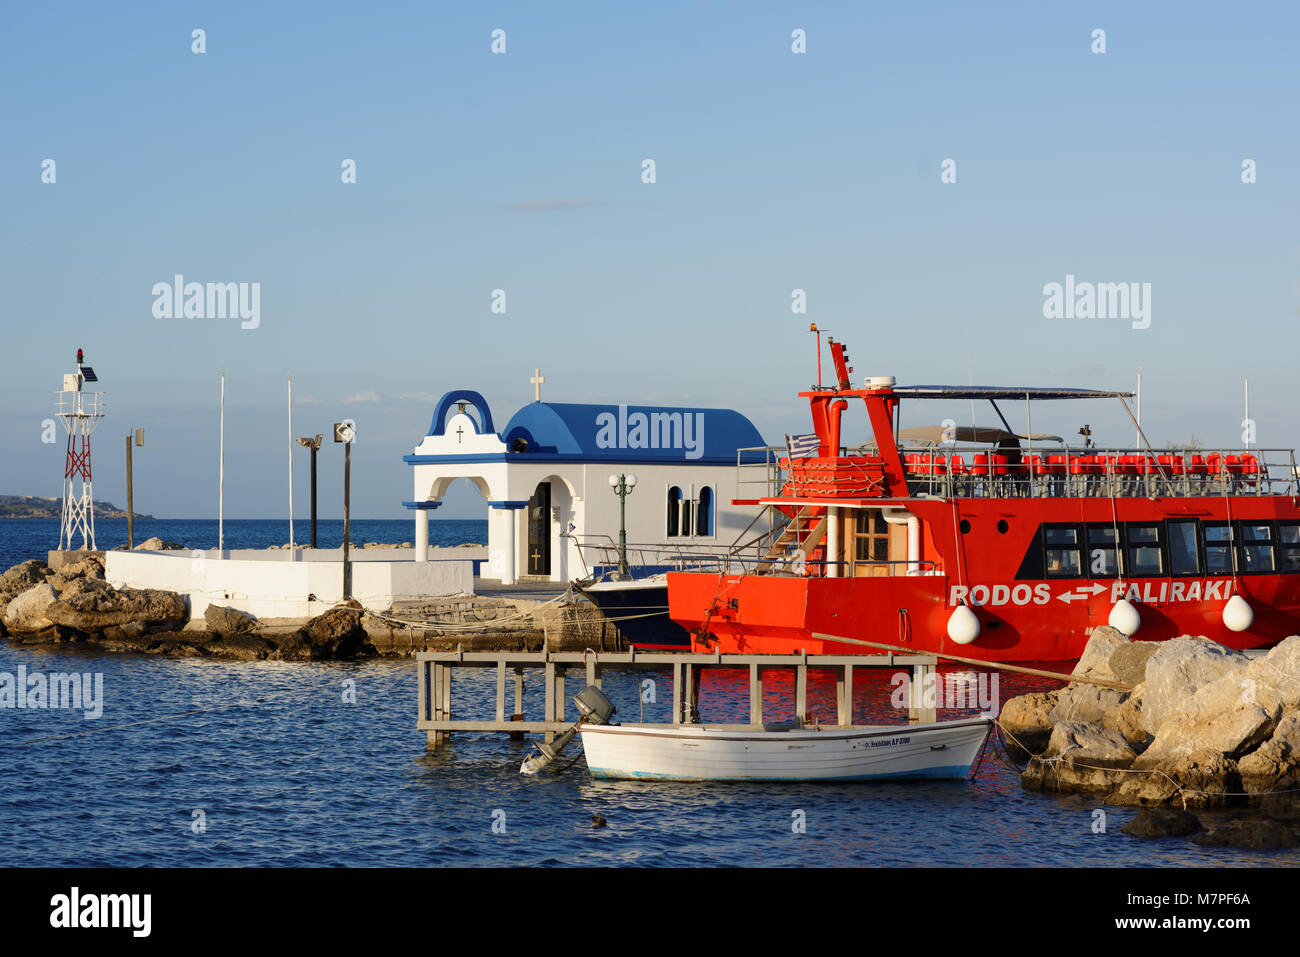 Faliraki, Rhodes island, Greece - October 8, 2017: Tour boat in the port of Faliraki. Faliraki is a popular tourist destination with a 5 km stretch of Stock Photo